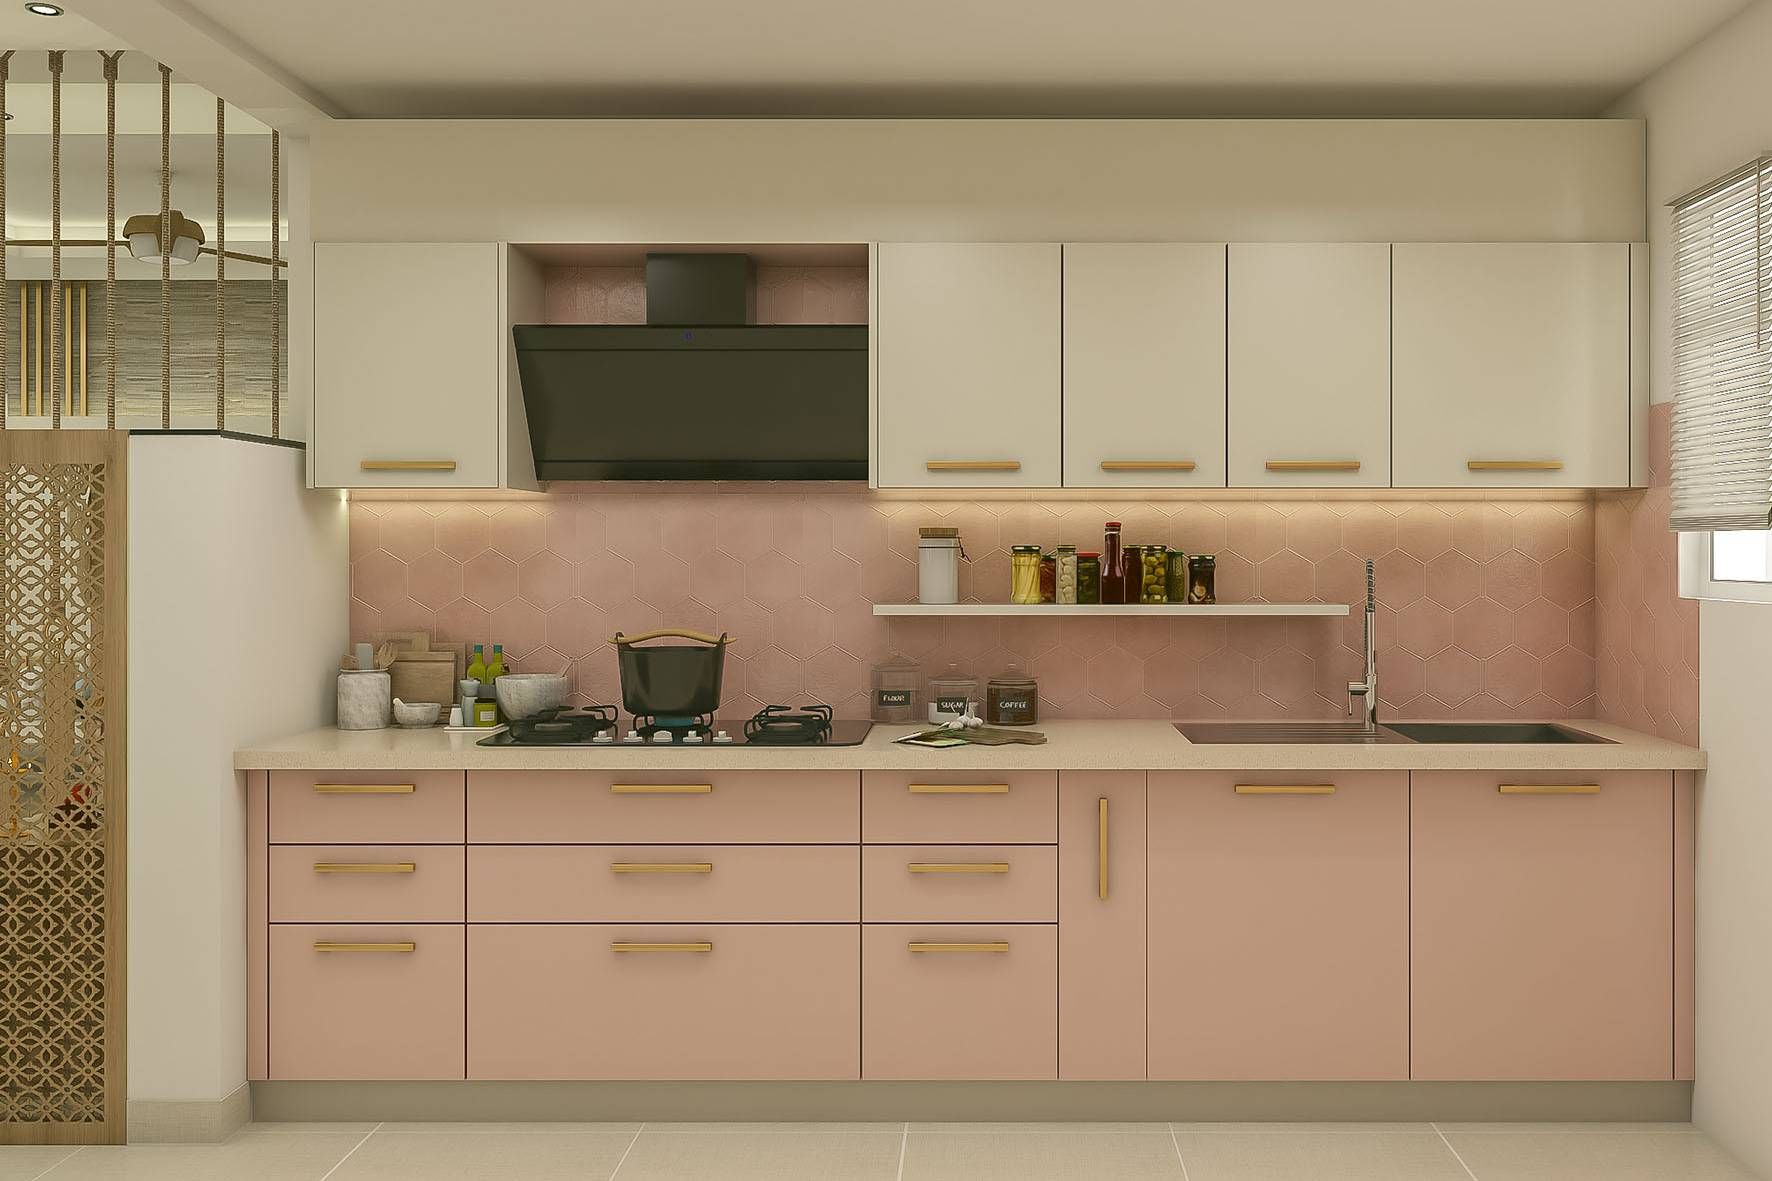 Modern Parallel Kitchen Design With Pink And Cream Storage Units